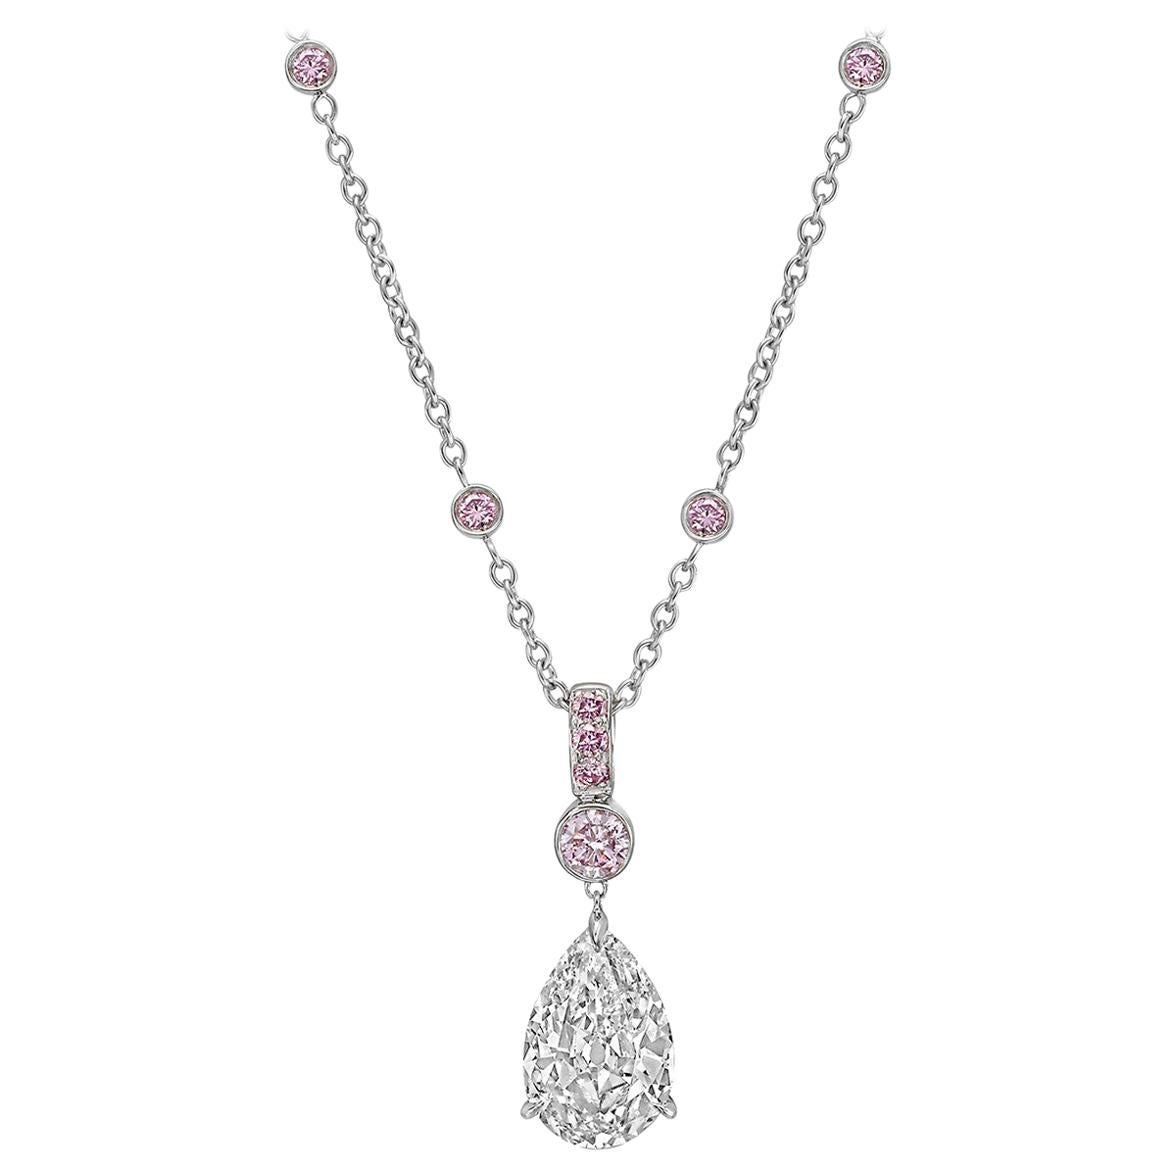 3.52 Carat Pear-Shaped Diamond Pendant Necklace For Sale